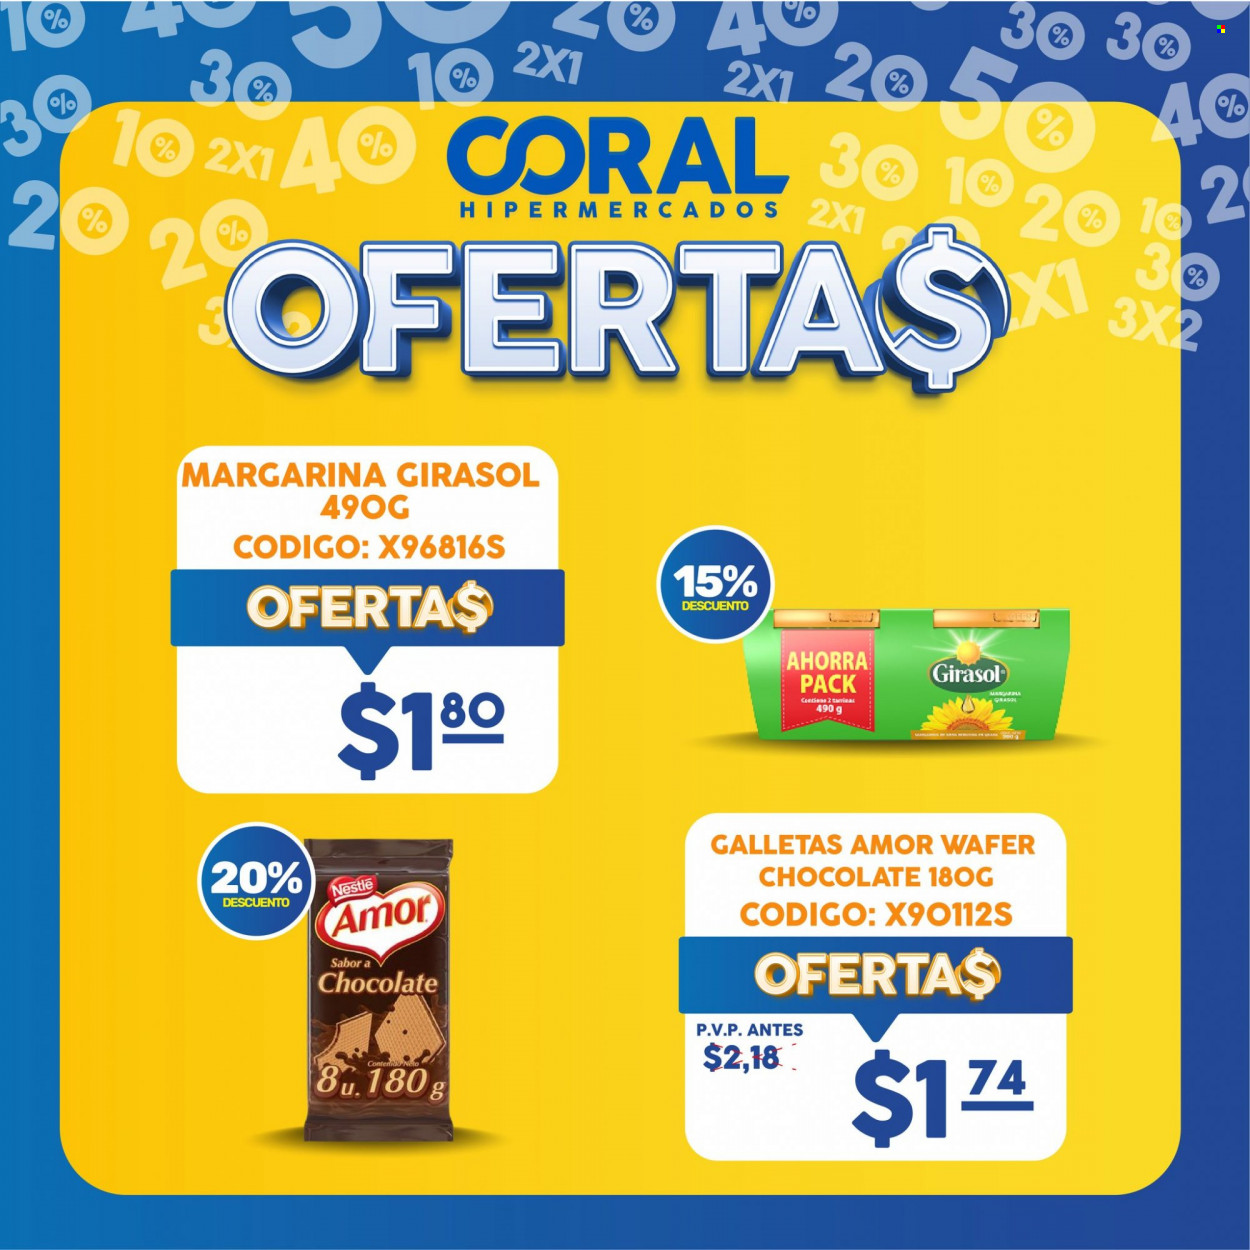 Folleto actual Coral Hipermercados - Ventas - Nestlé, margarina, galletas, oblea, girasol. Página 13.